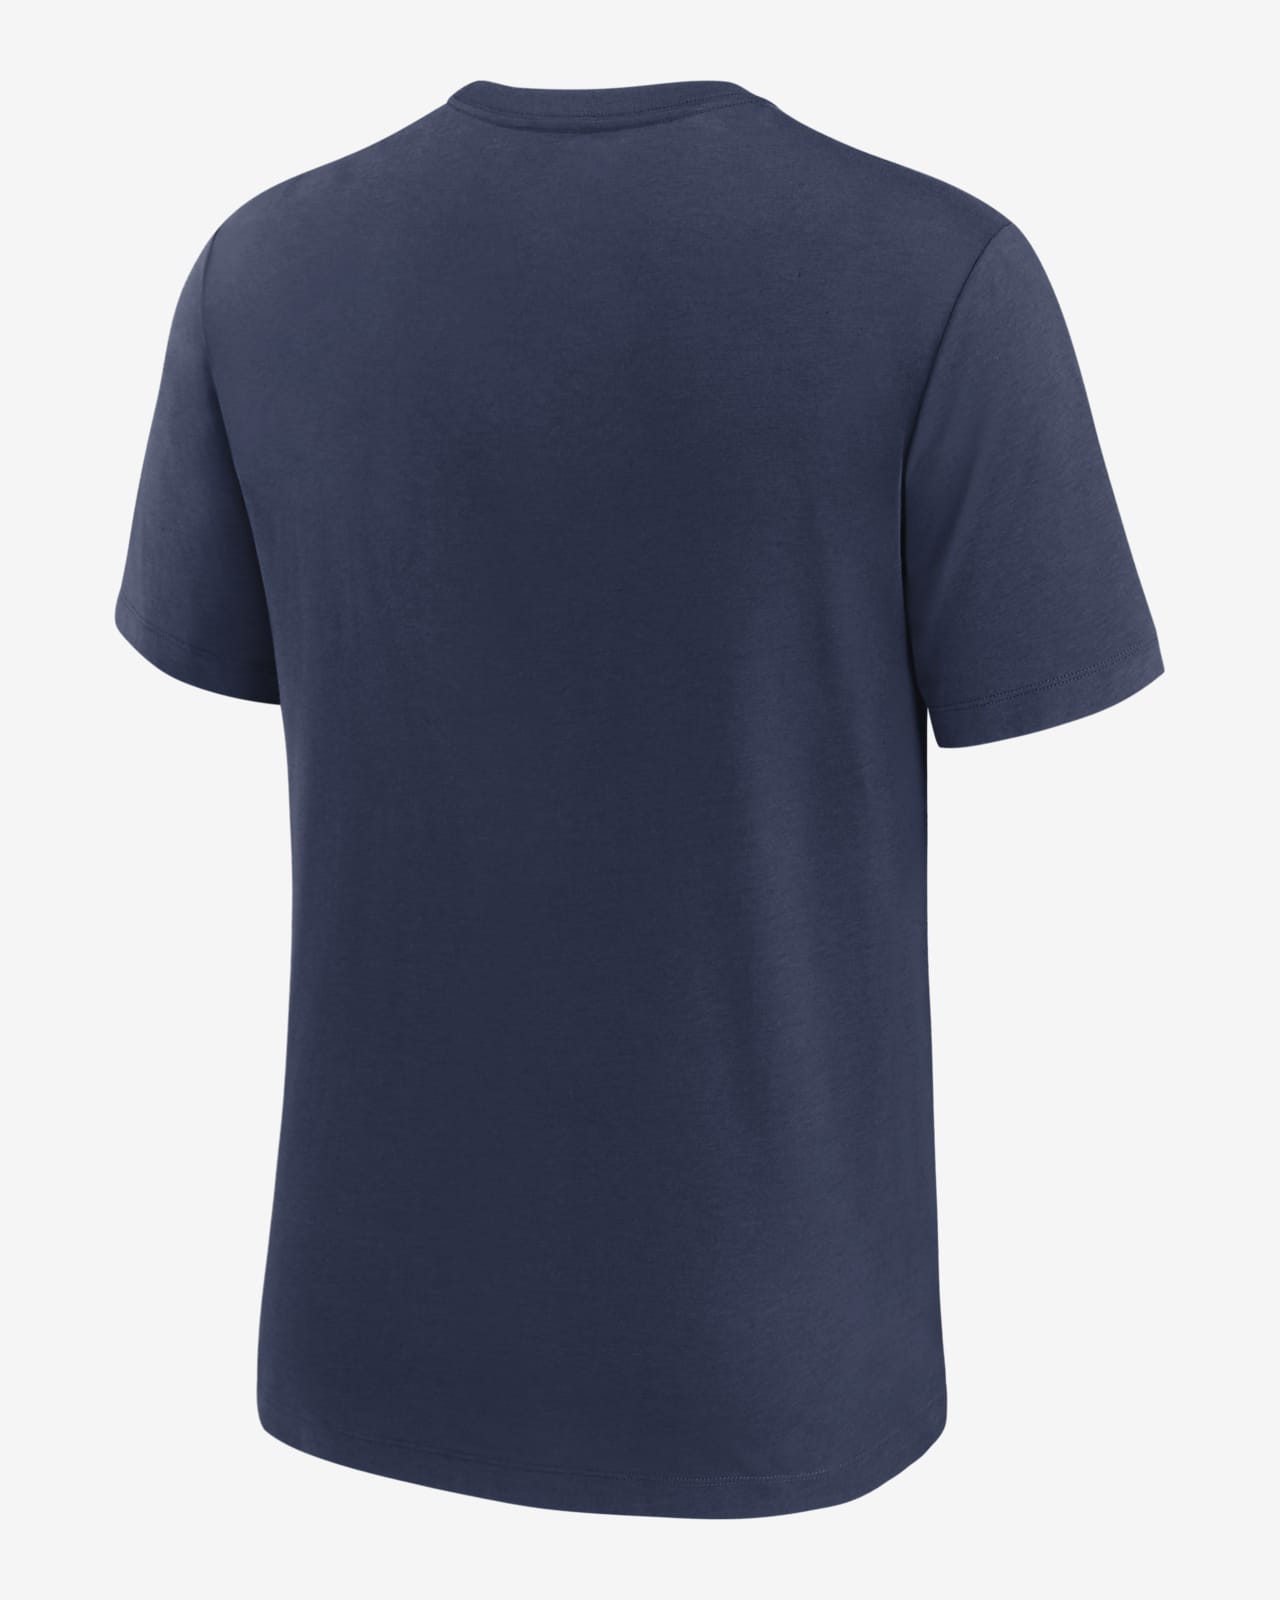 Vintage Nike Blue T Shirt Detroit Tigers Motor City Size L 